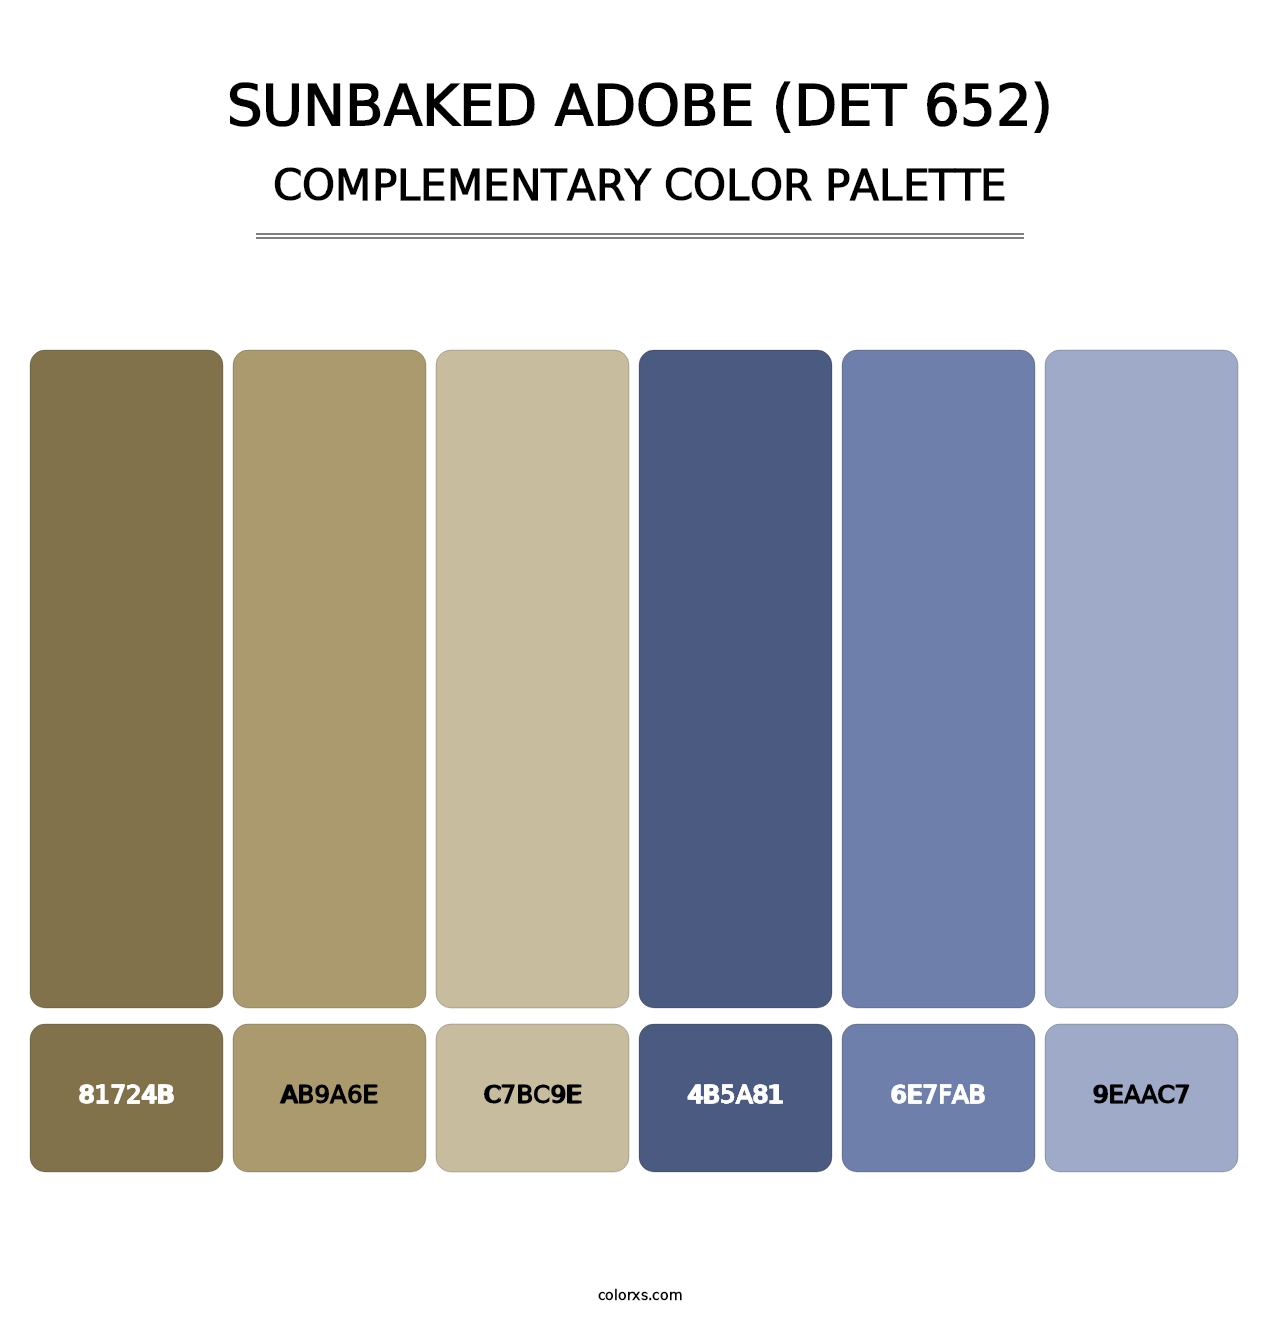 Sunbaked Adobe (DET 652) - Complementary Color Palette